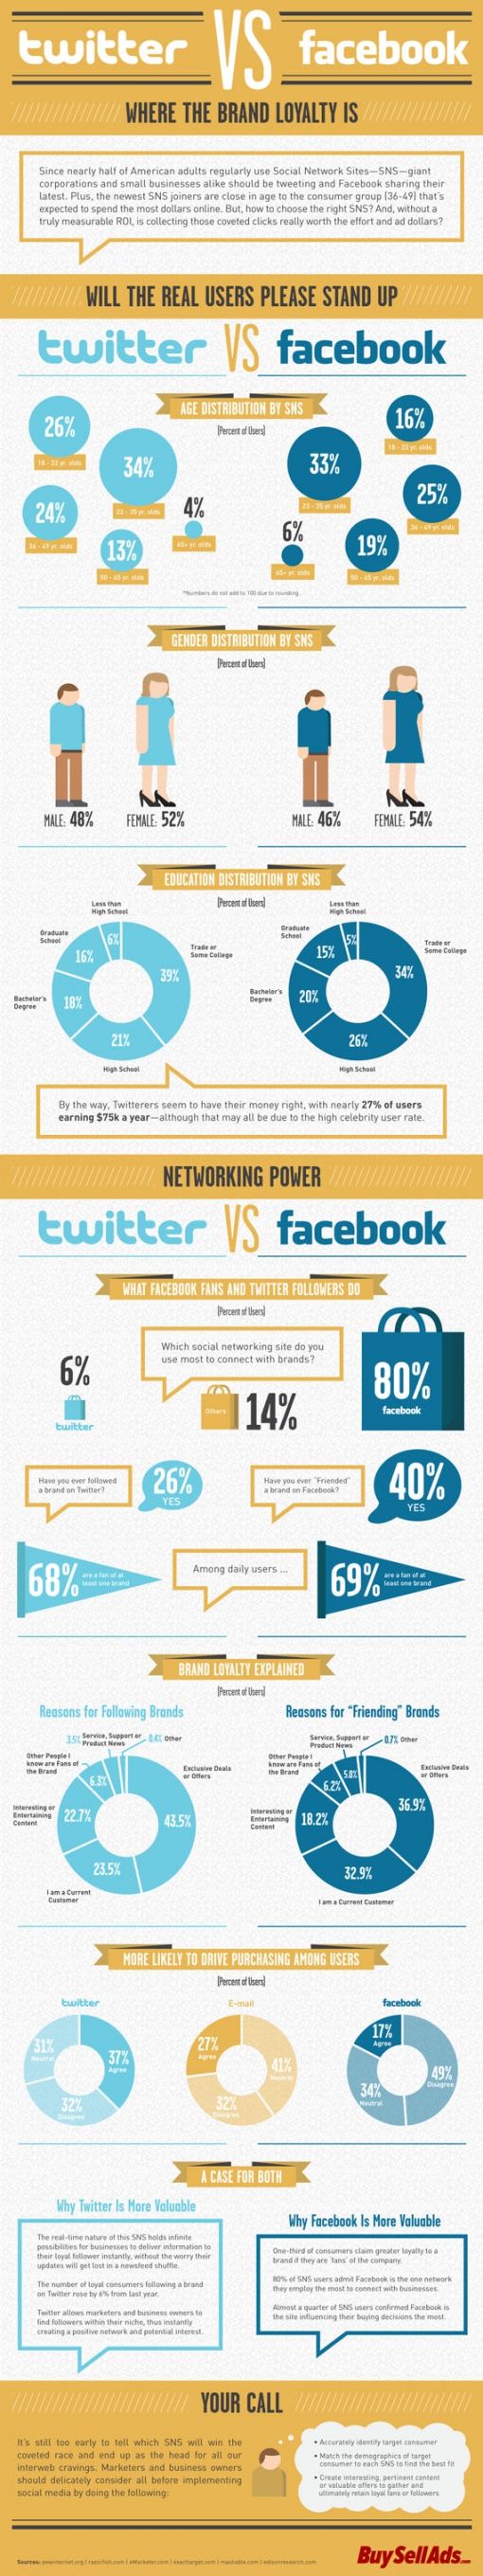 twitter-vs-facebook-infographic